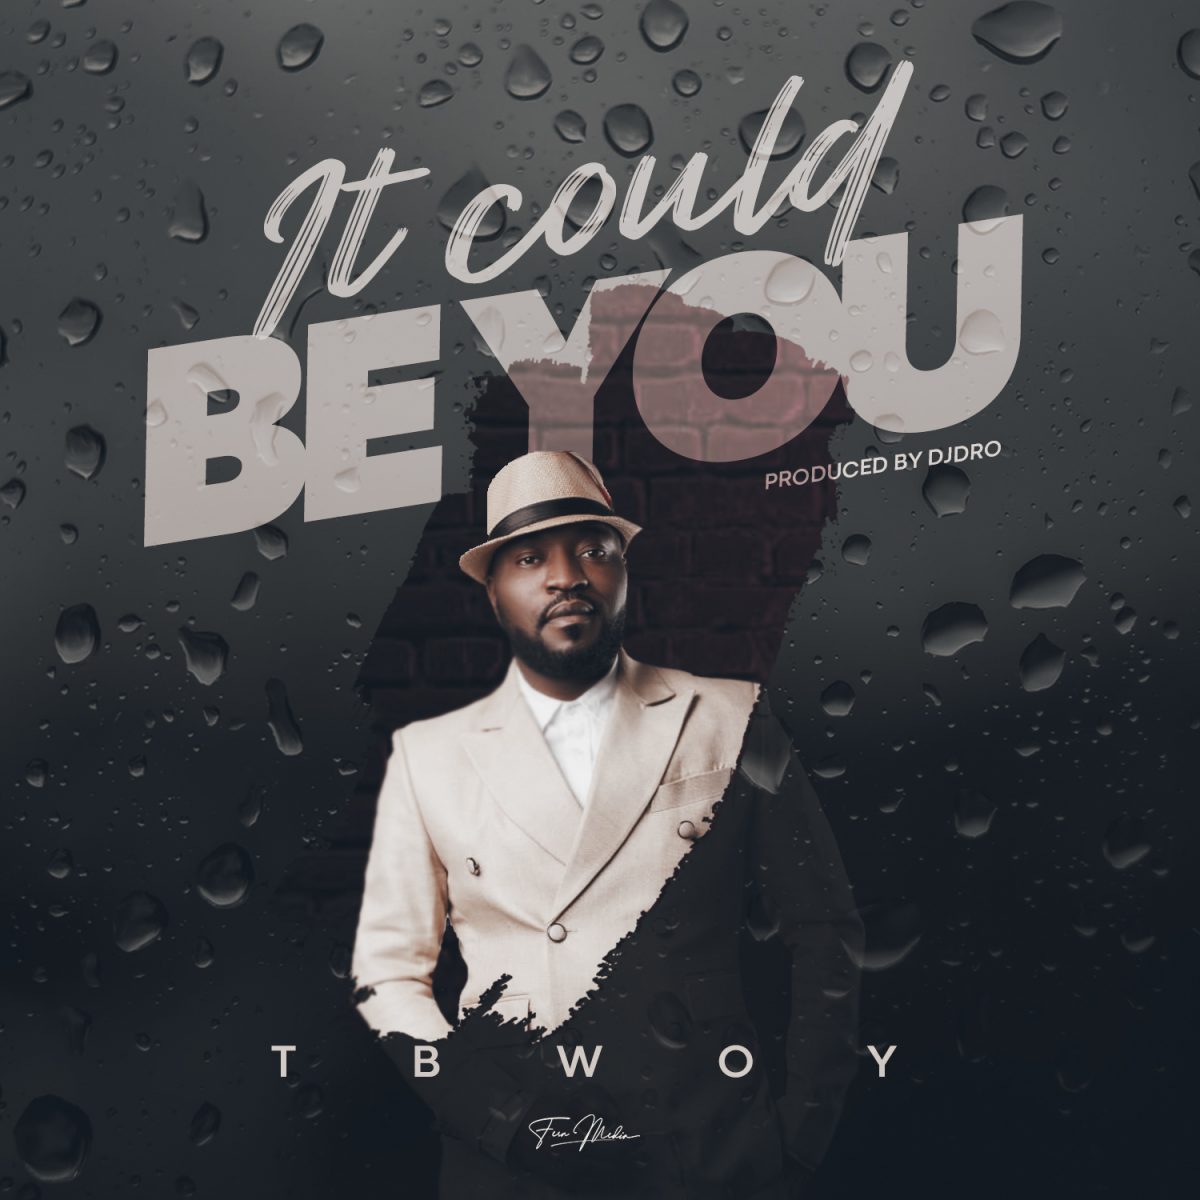 TBwoy - "It Could Be You (Clubfix)" (Prod. By Dj Dro & UptownBeats) Mp3